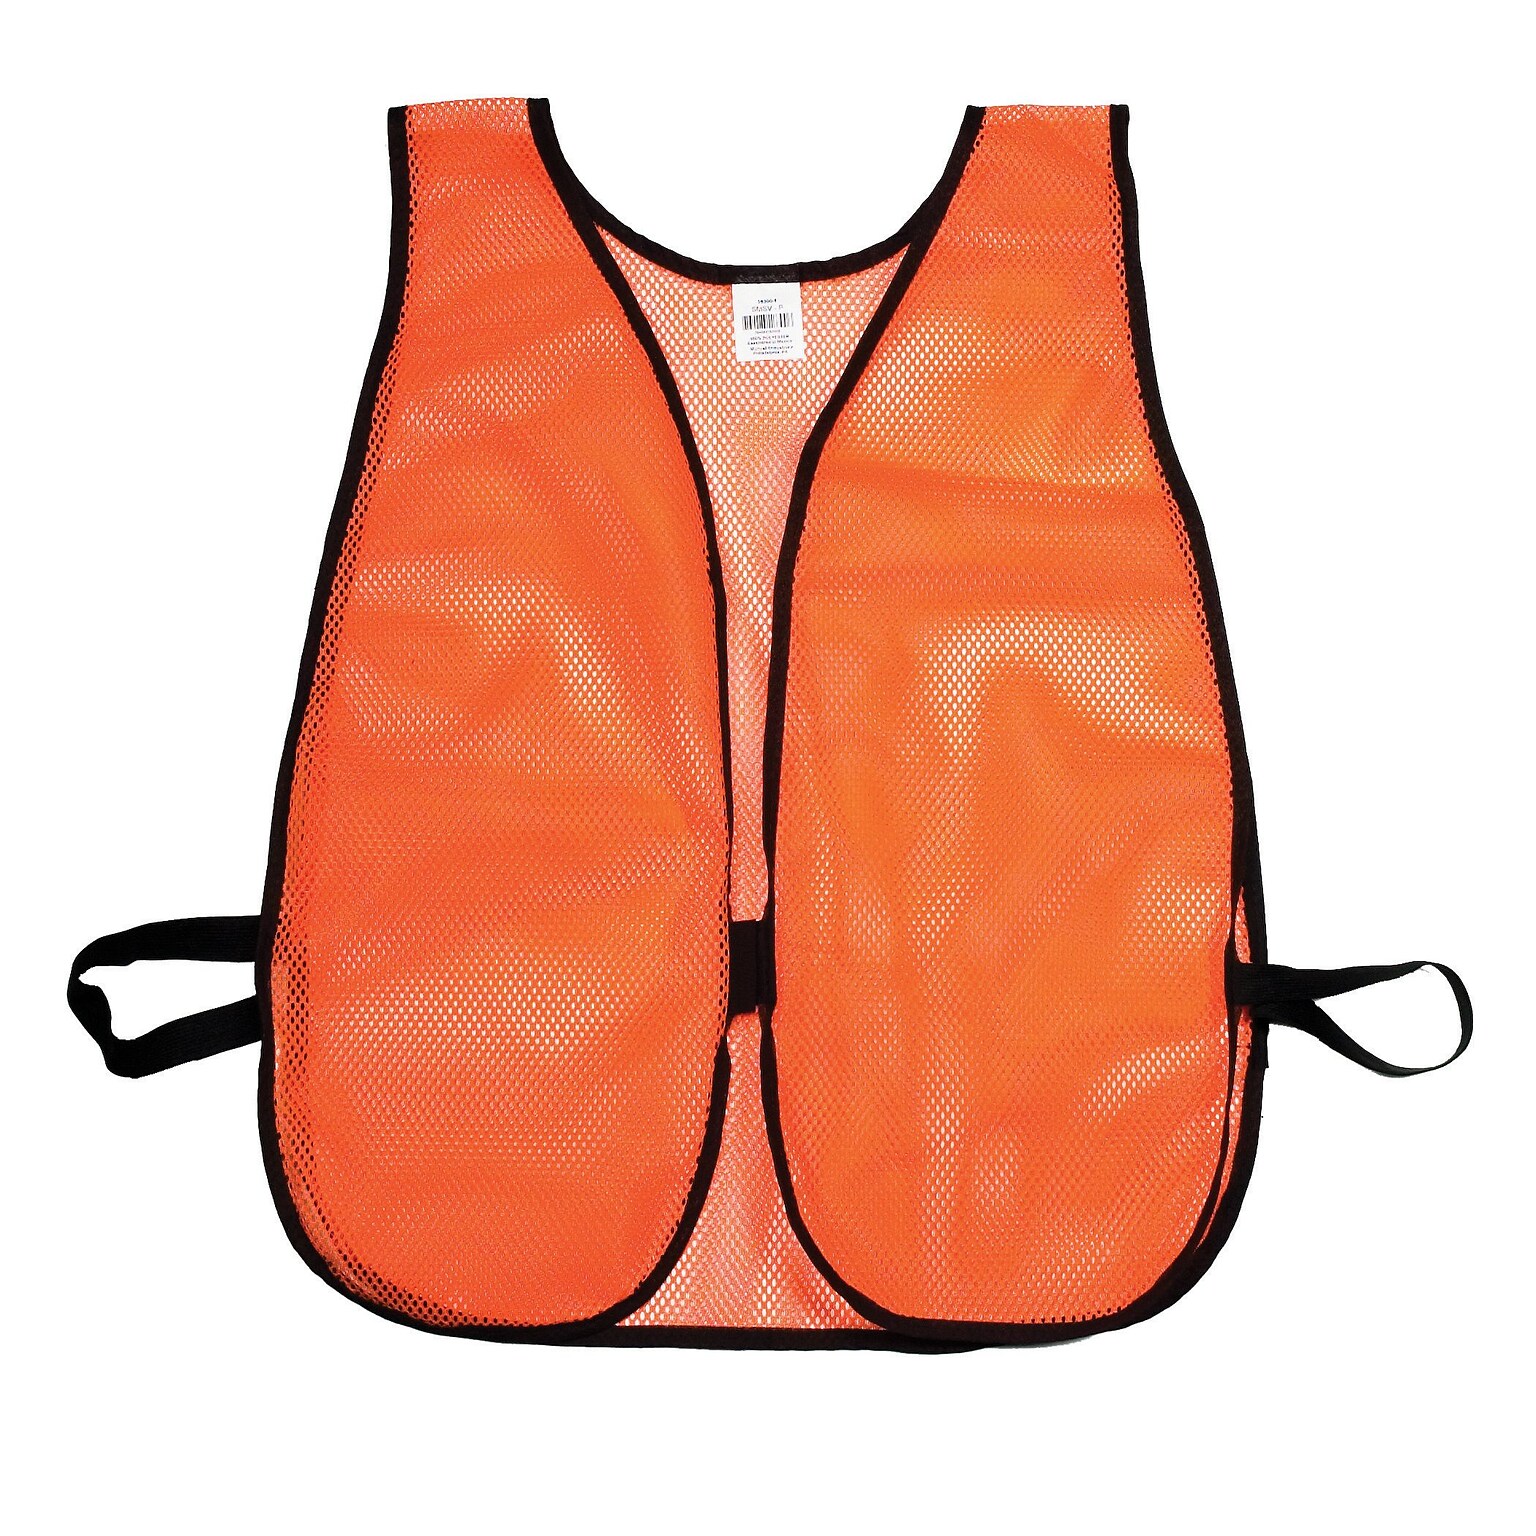 Mutual Industries MiViz High Visibility Sleeveless Safety Vest, Orange, One Size (16300-1)